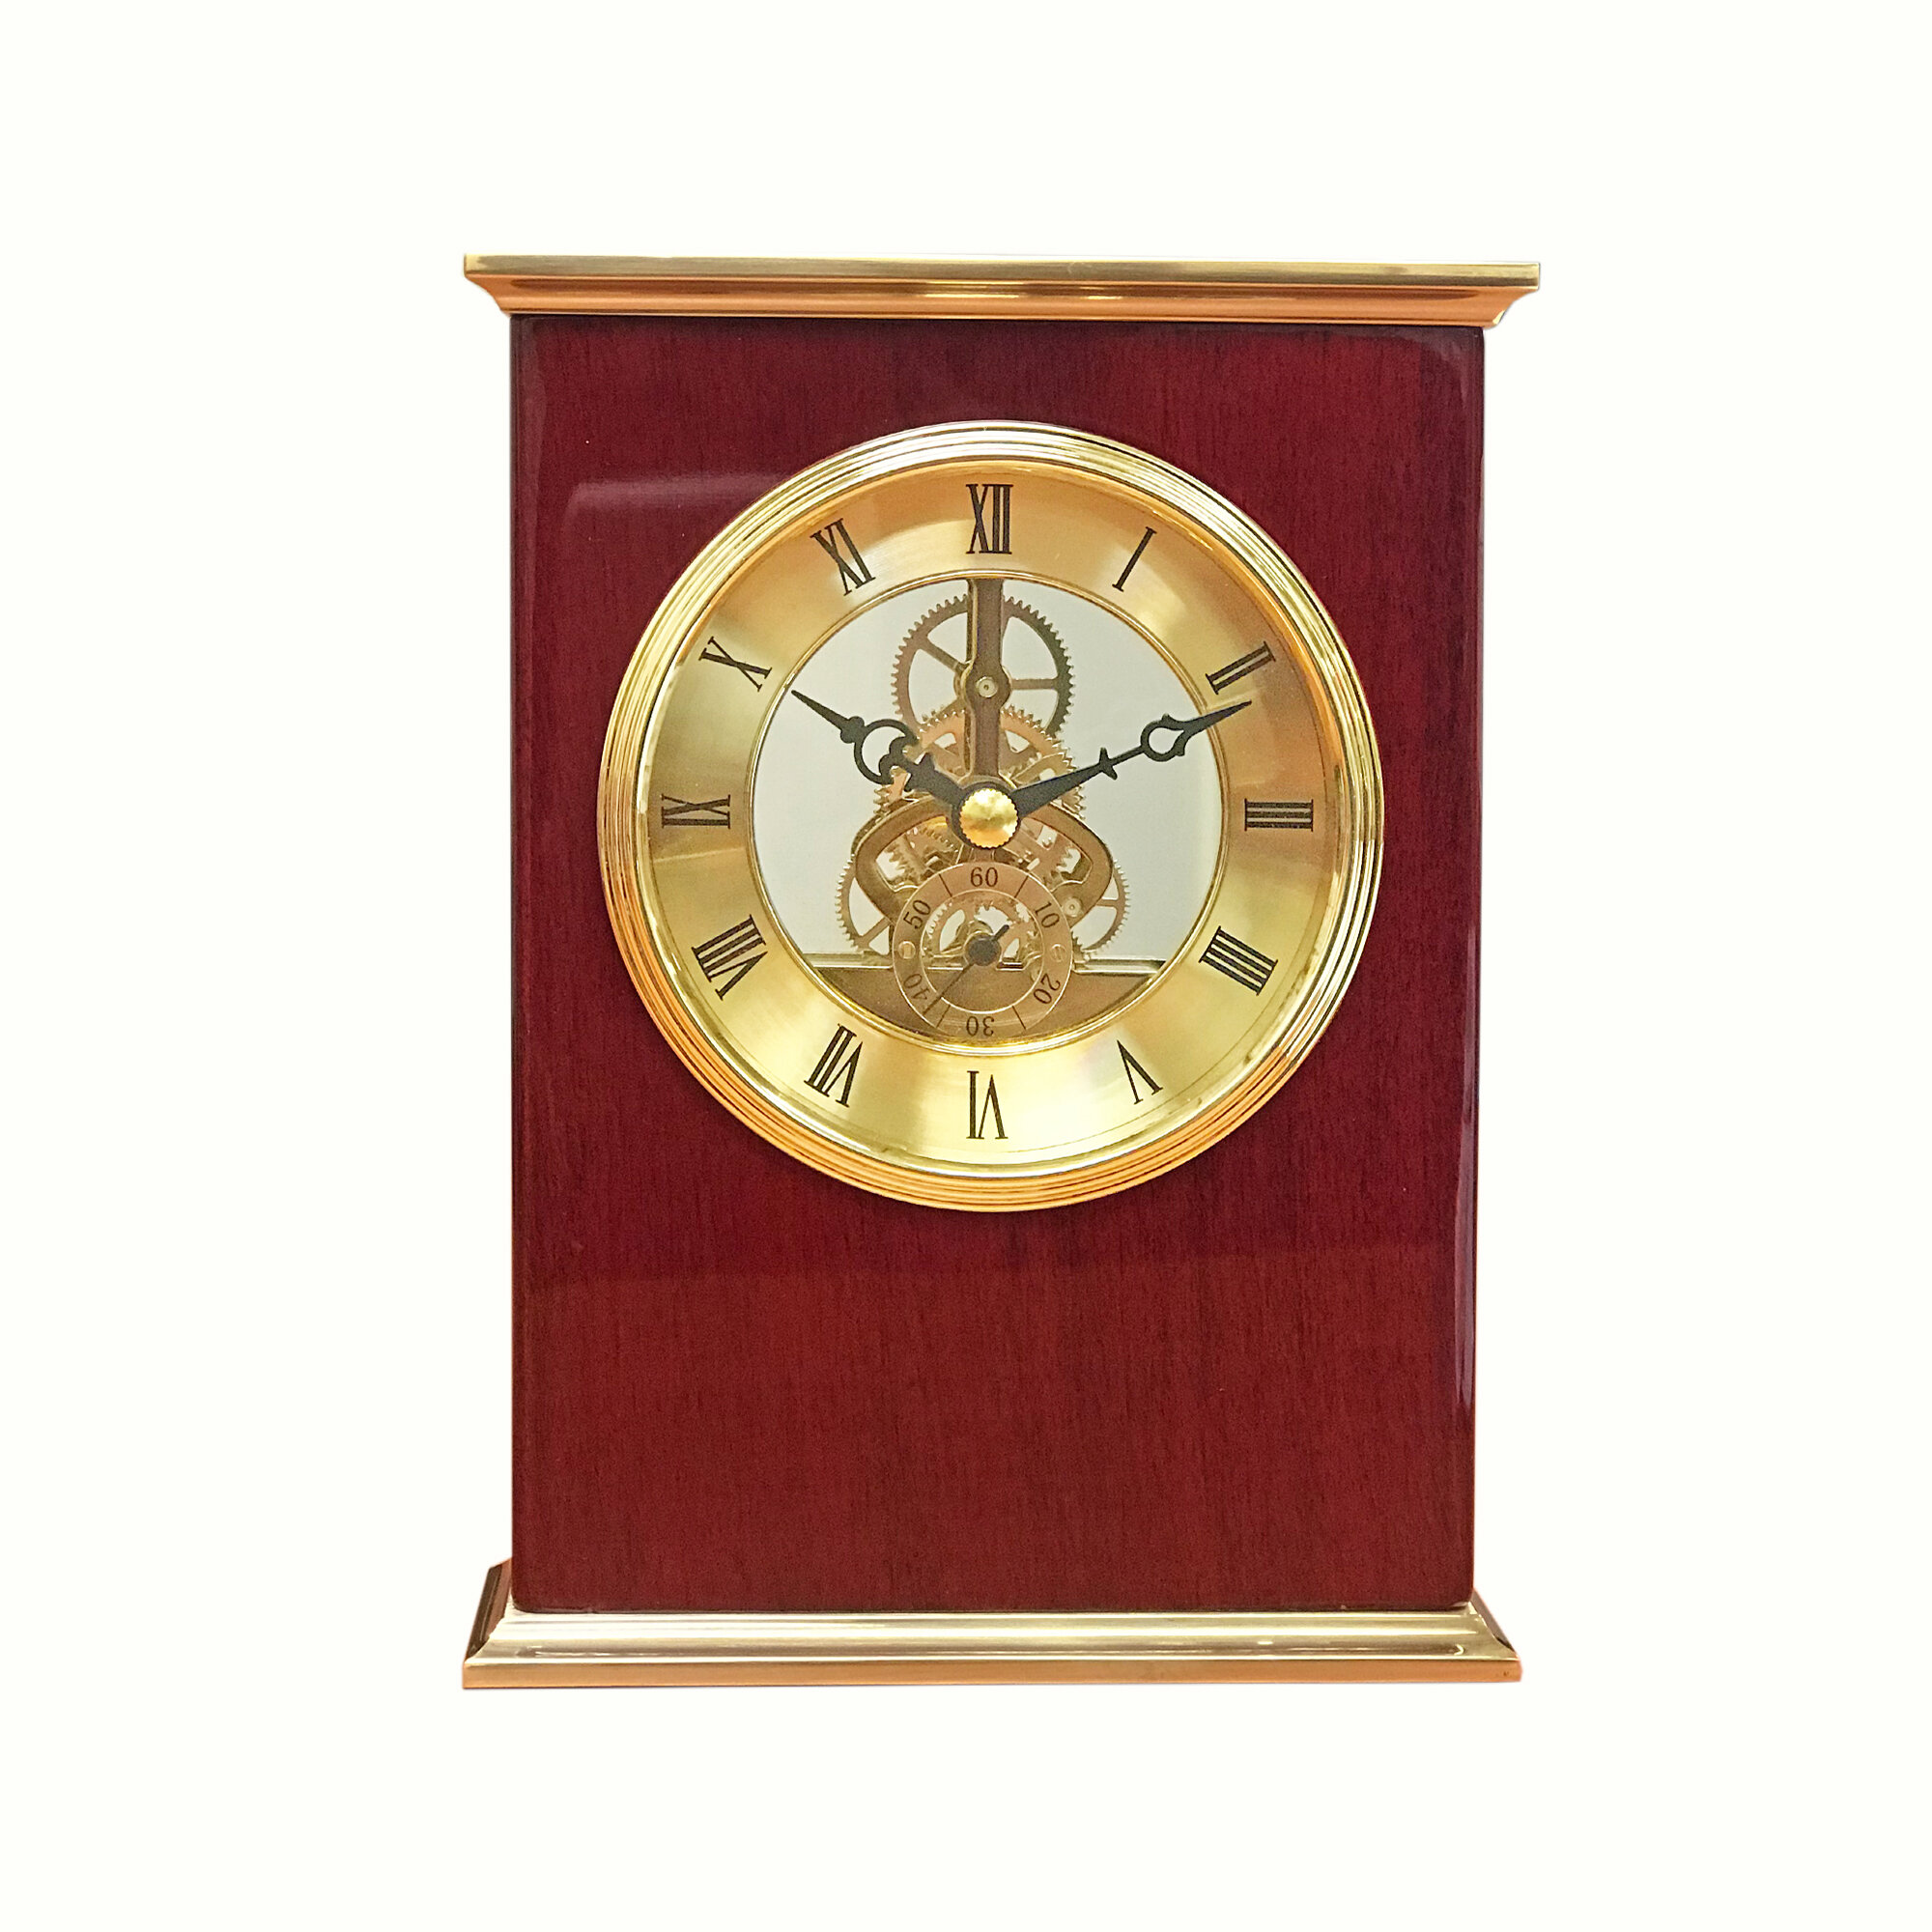 Mahogany & Gold Piano Wood Mantel Clock Skeleton Style Movement